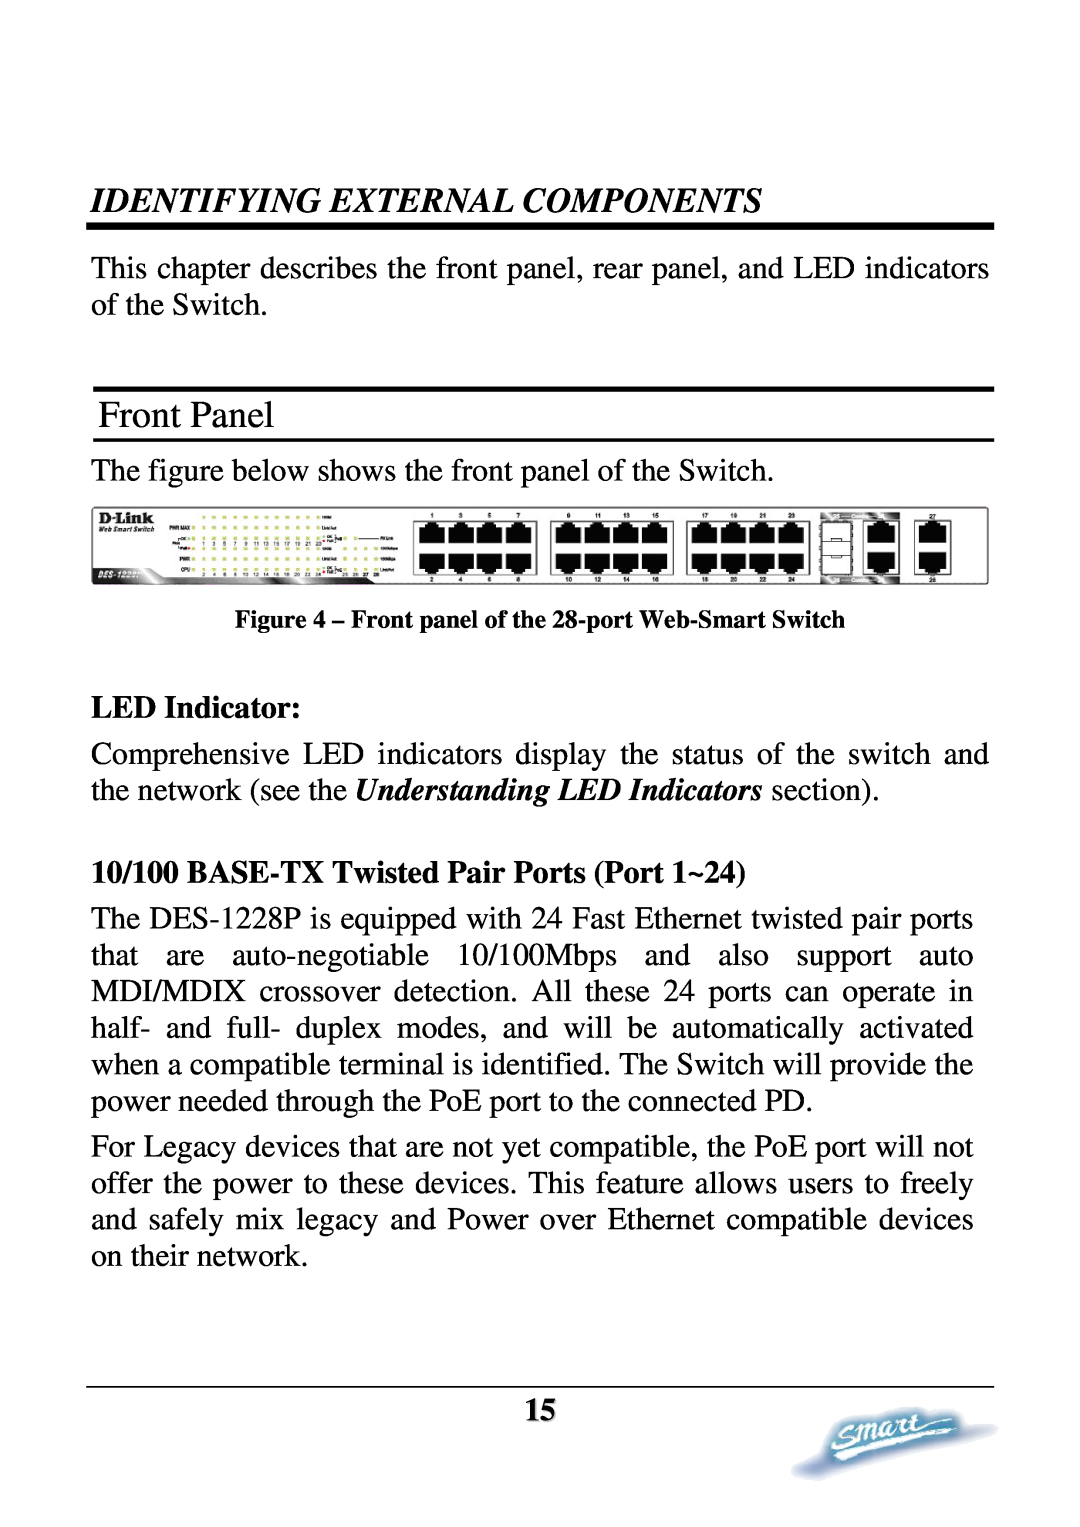 D-Link DES-1228P user manual Front Panel, Identifying External Components 